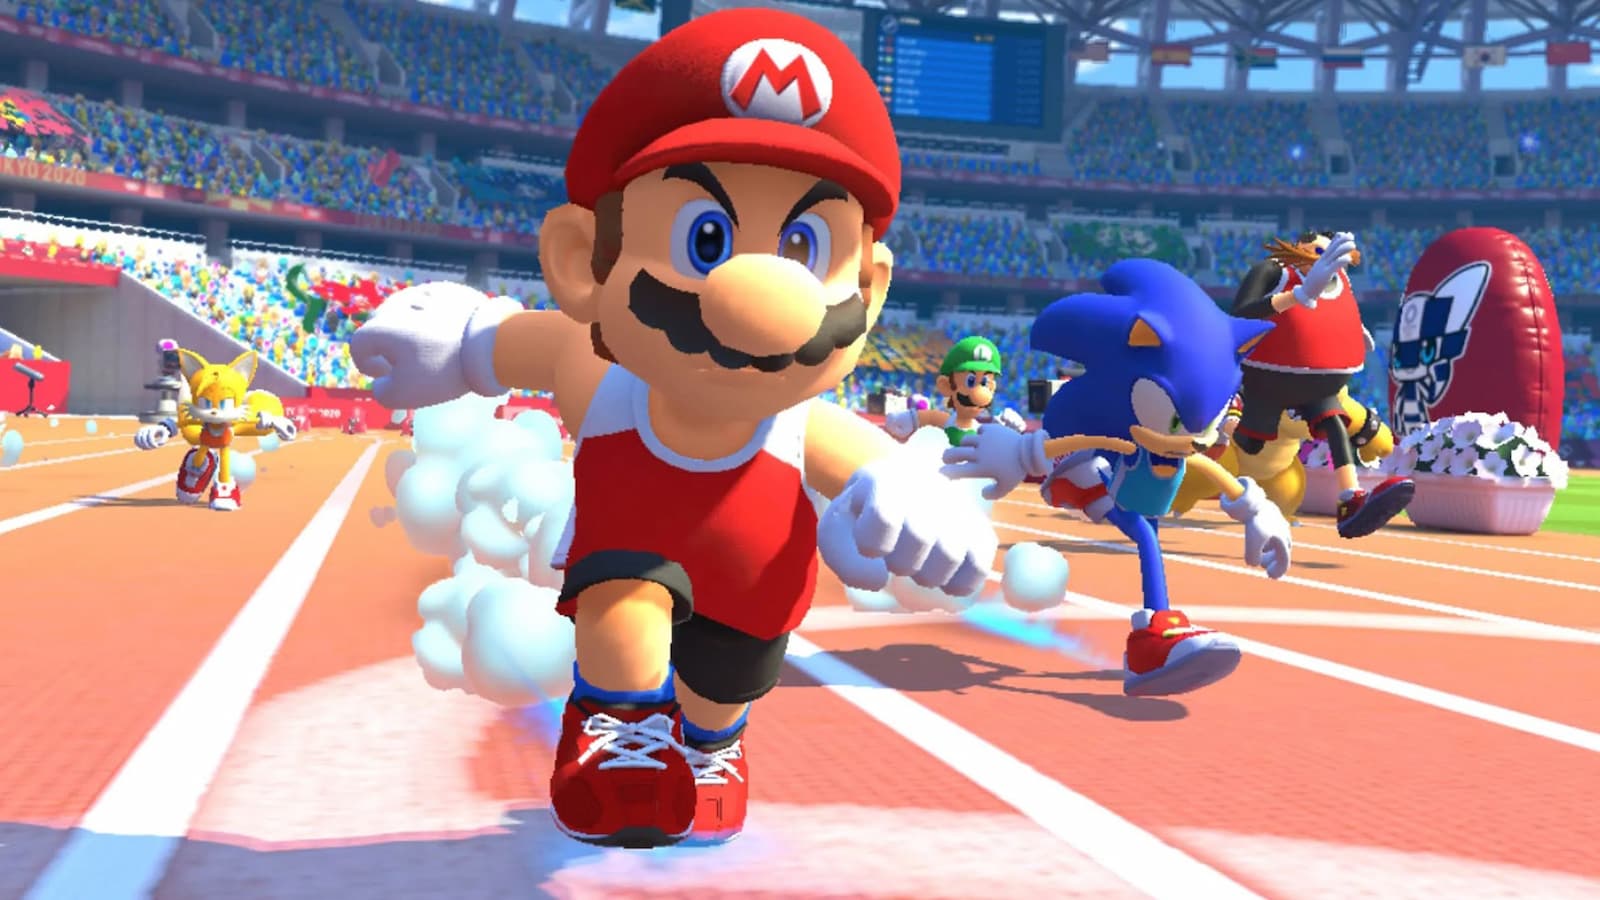 Sega still adamant that Sonic can “surpass” Mario - Dexerto